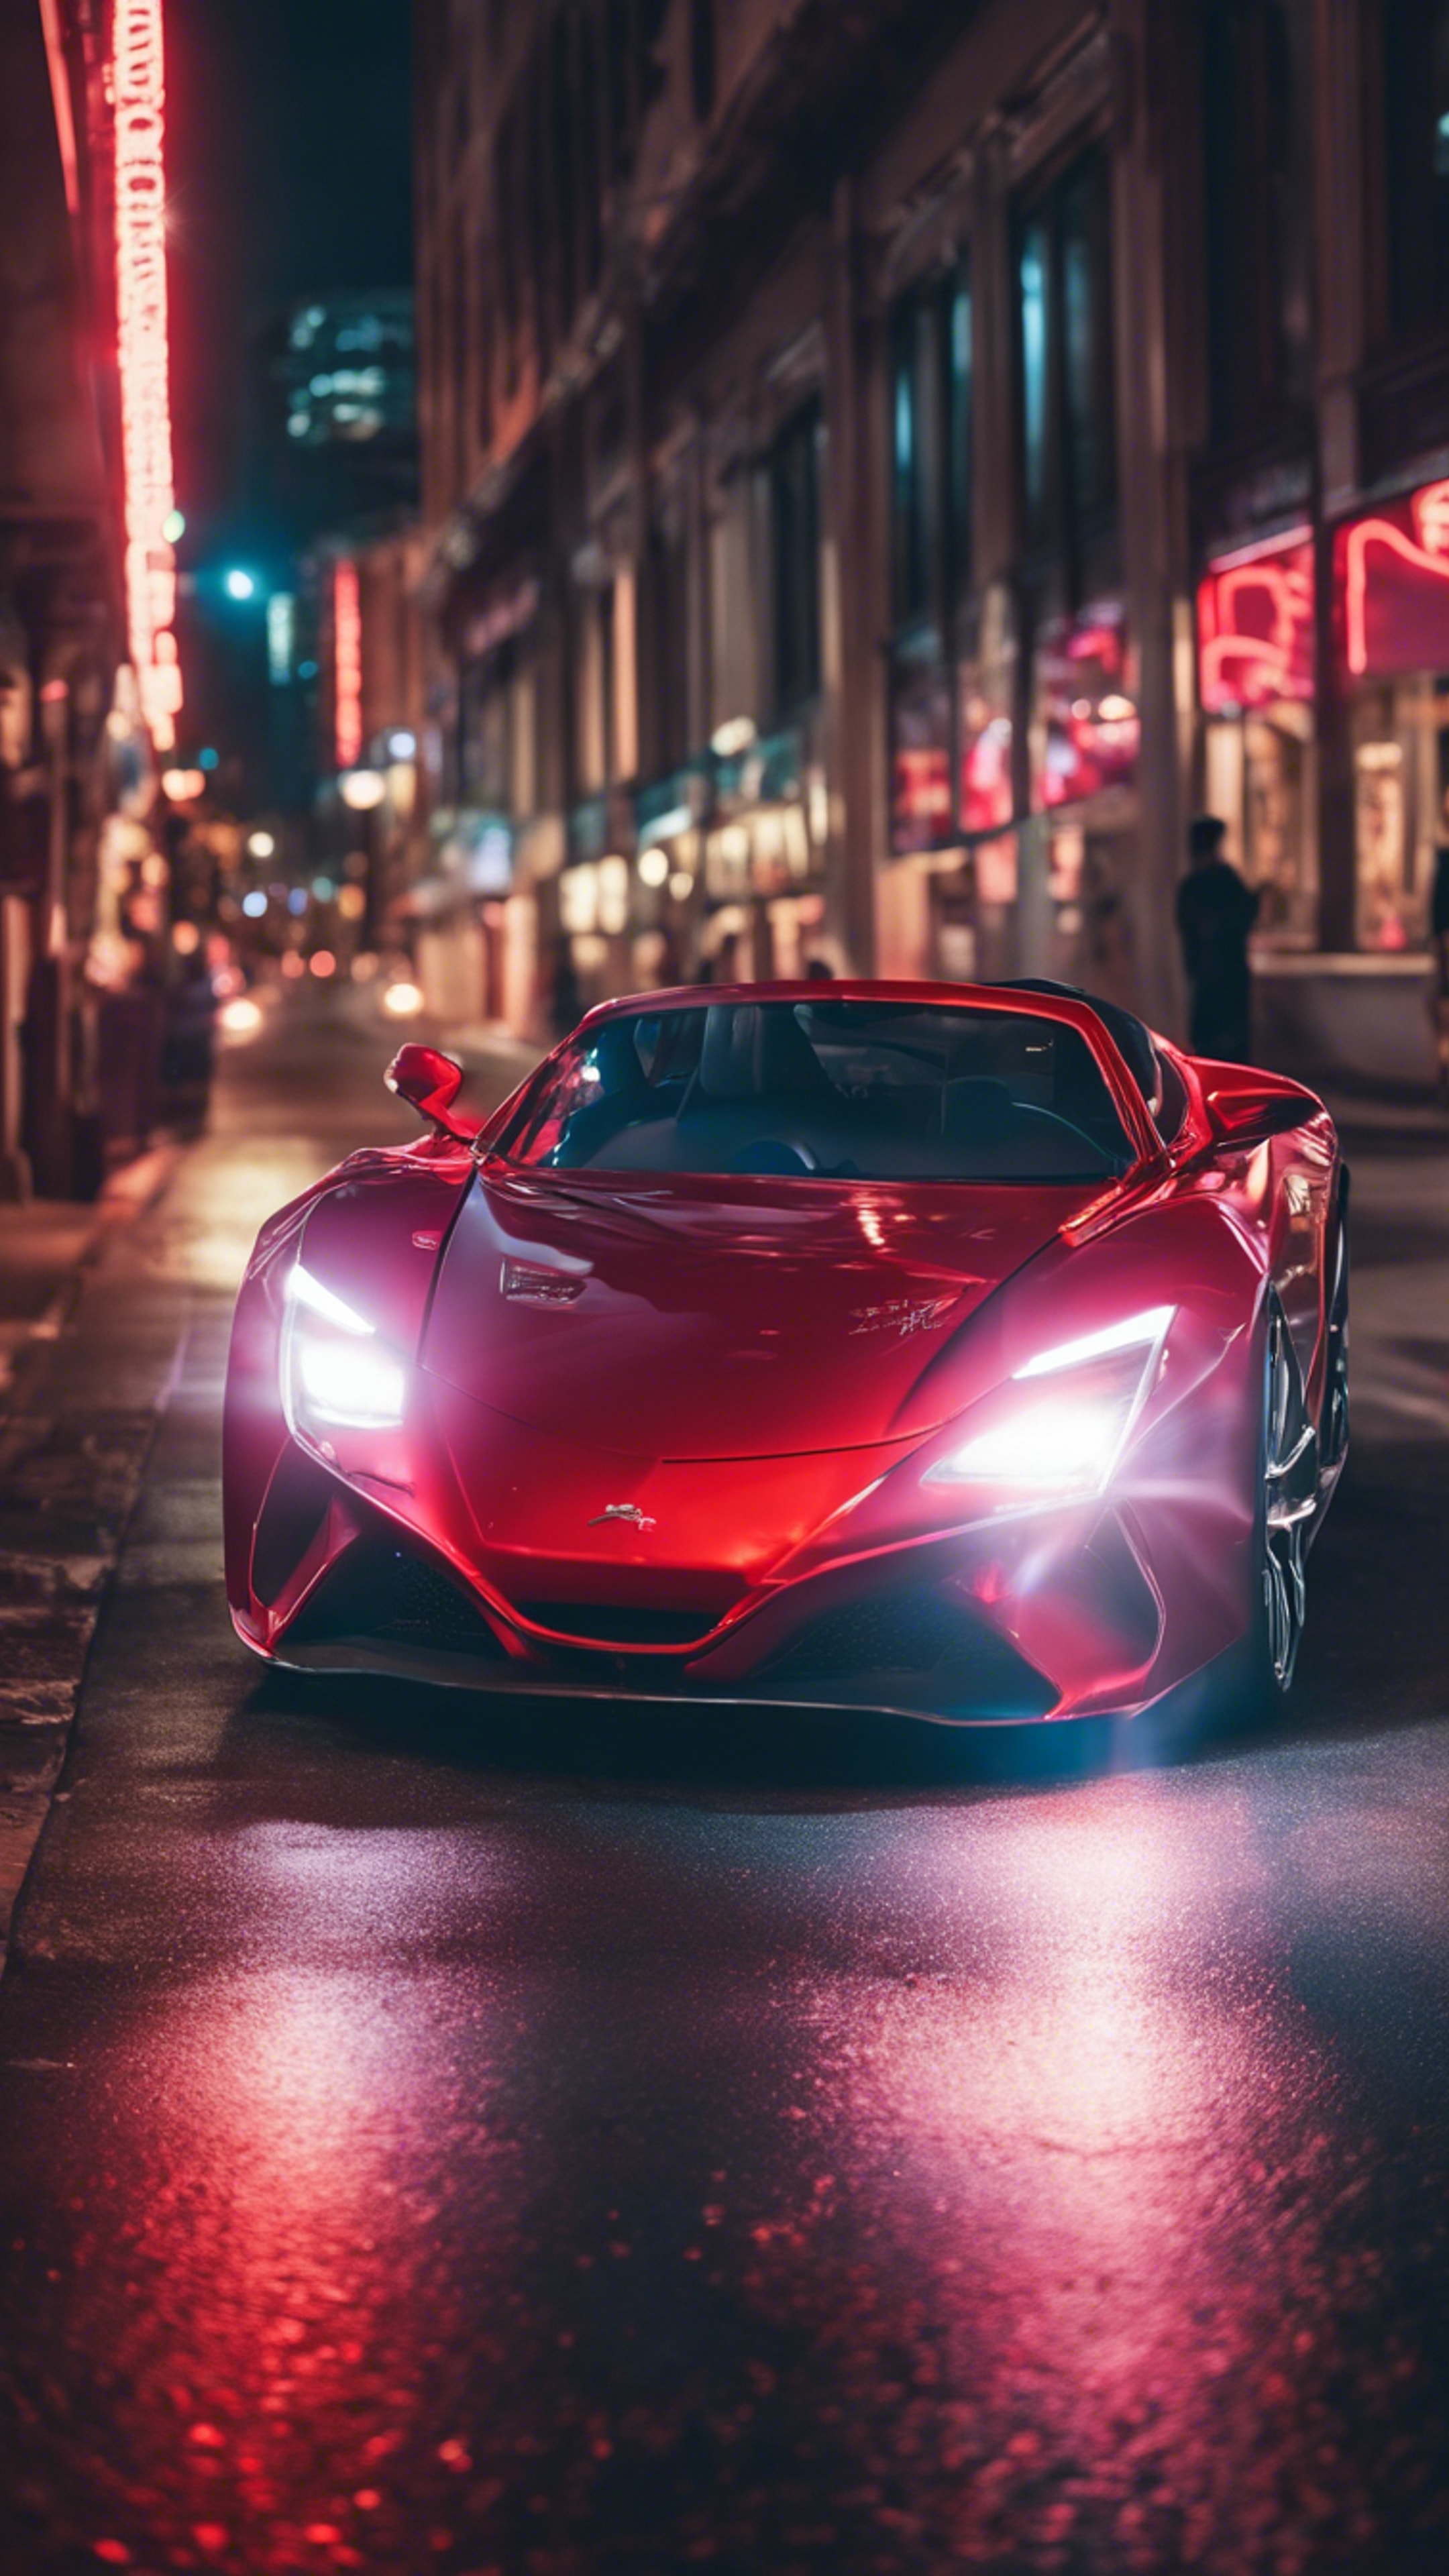 A sleek, cool red neon sports car zipping along a nighttime city street. Hintergrund[c8ae8bc93cf04b2eb441]